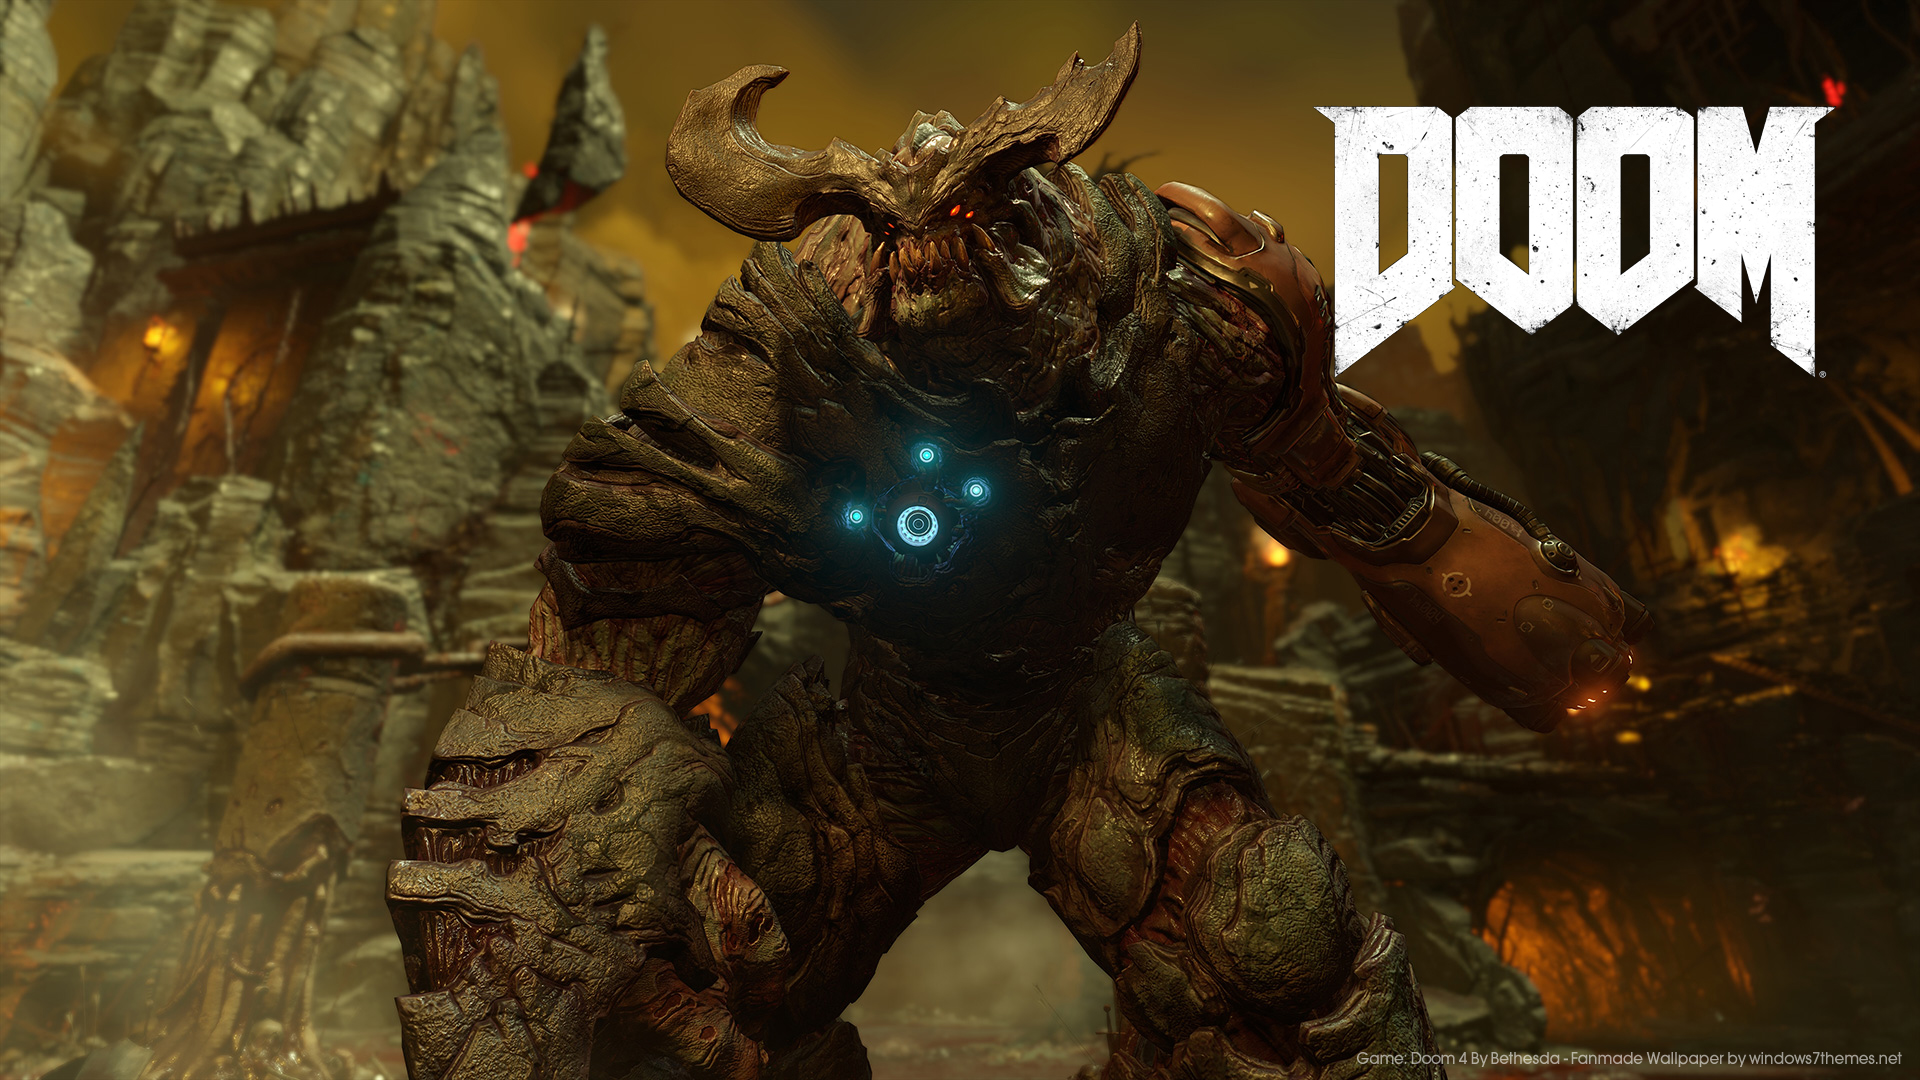 doom live wallpaper,action adventure game,pc game,demon,cg artwork,fictional character